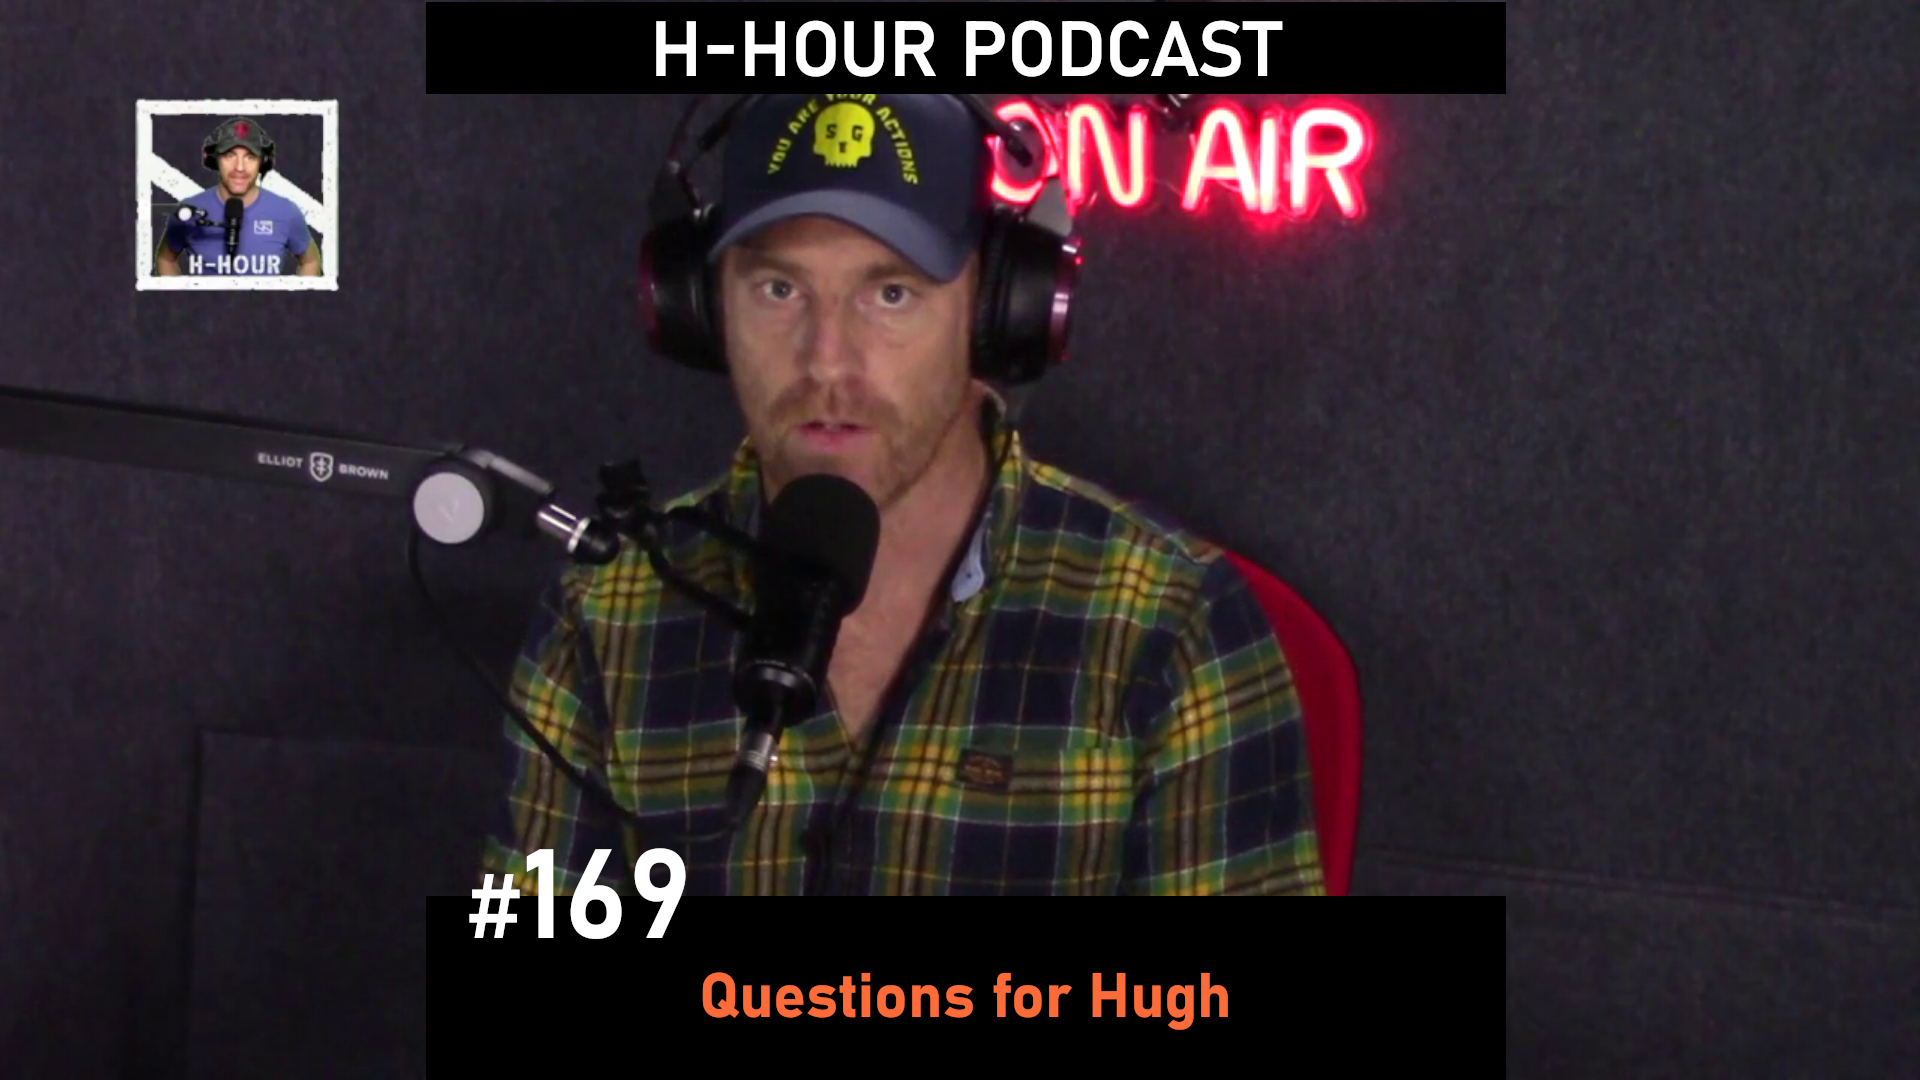 Podcast cover image hugh keir questions h-hour